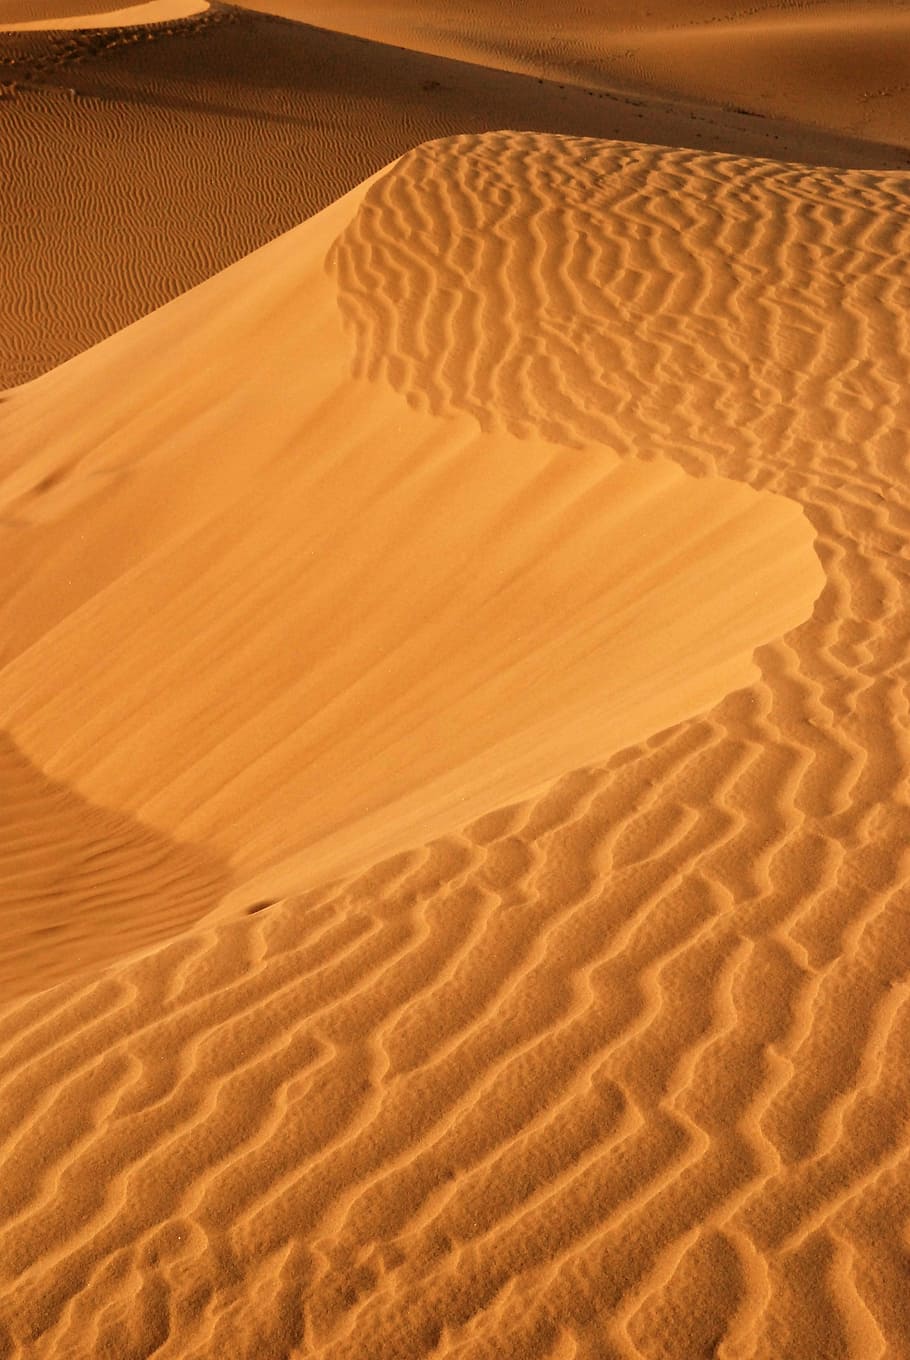 golden sand, sand dunes, desert, sand, sand dune, land, landscape, scenics - nature, climate, arid climate